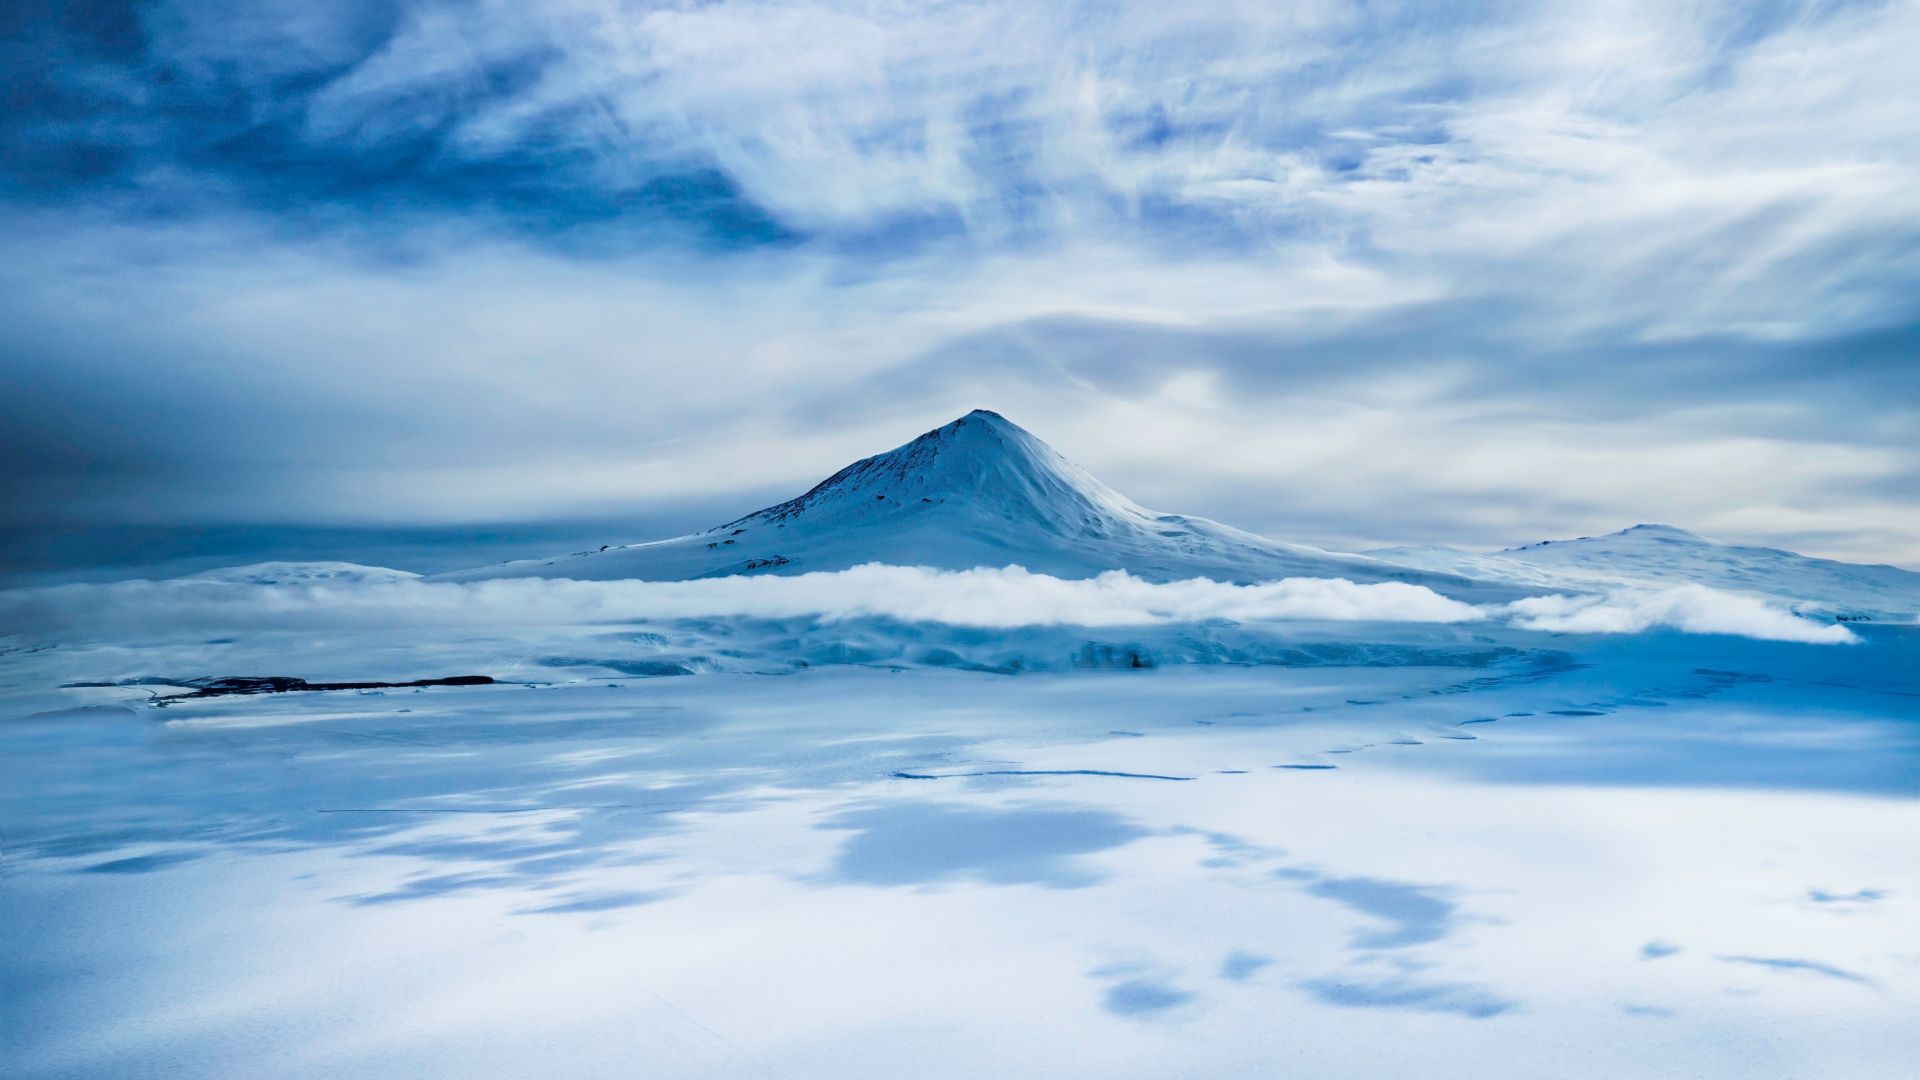 Erebus, Antarctica, volcano, snow, winter, 5k (horizontal)